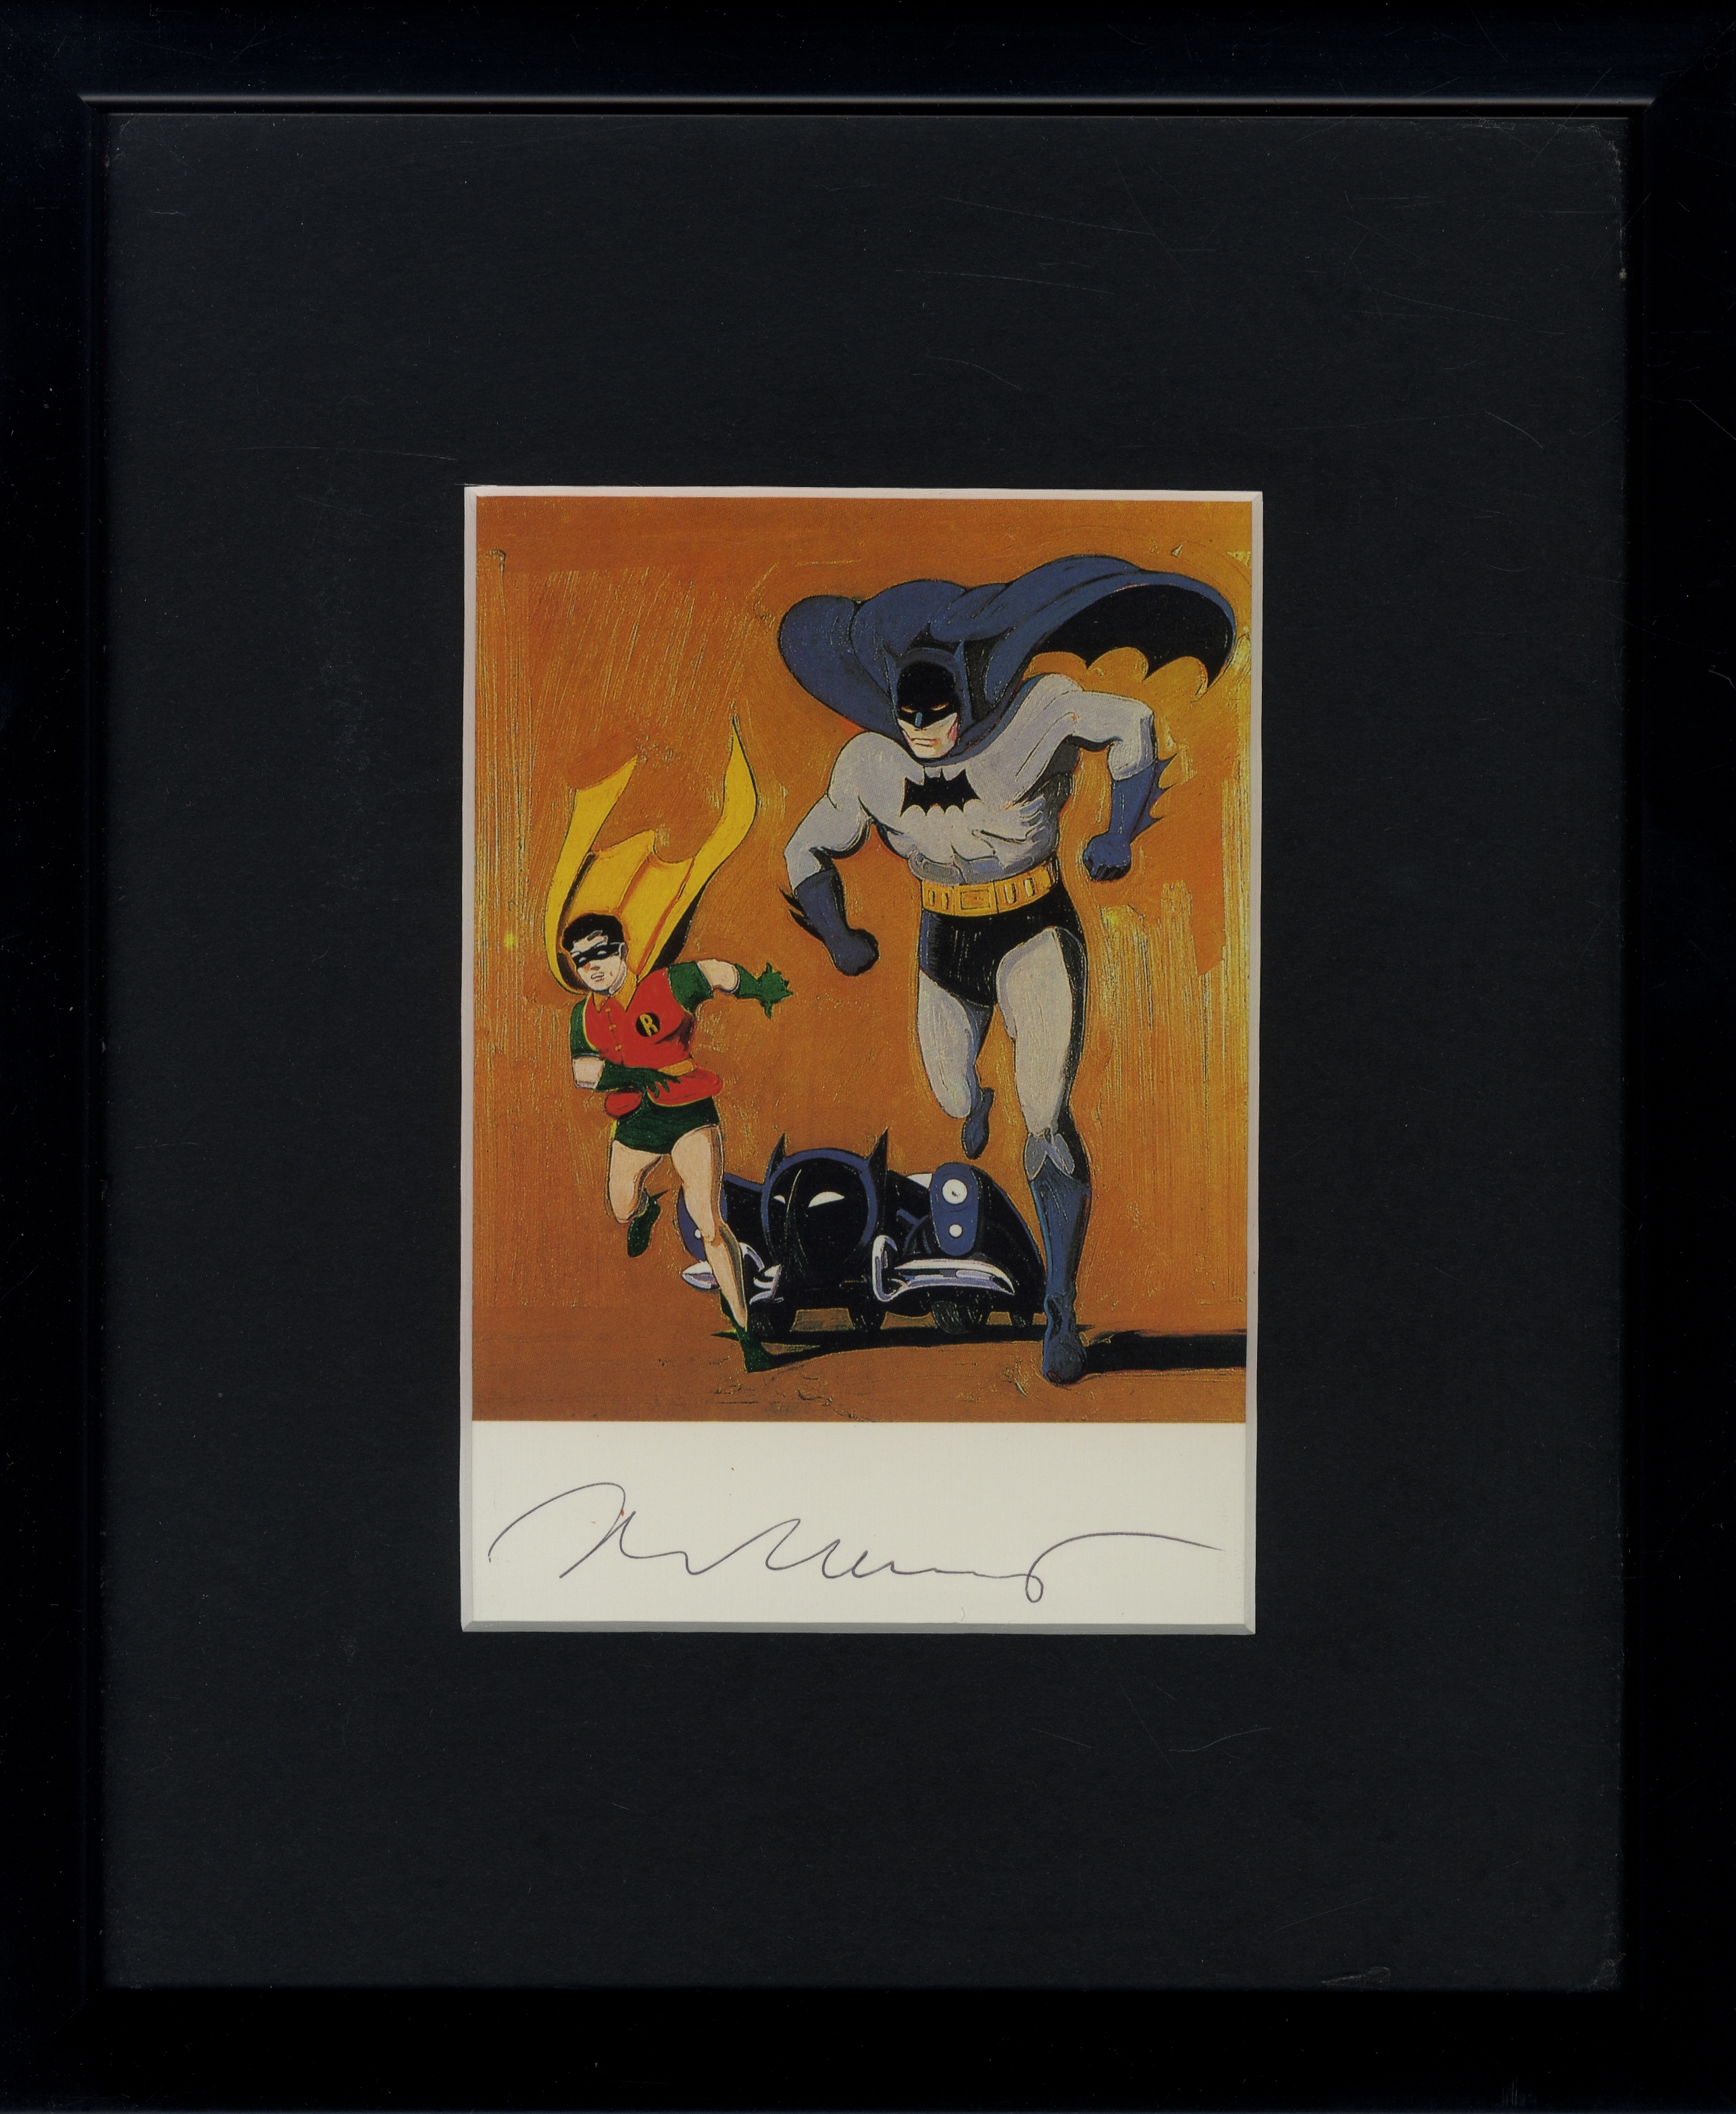 [BATMAN]: RAMOS MEL: (1935- ) American Artist, a member of the Pop Art movement in the 1960s.